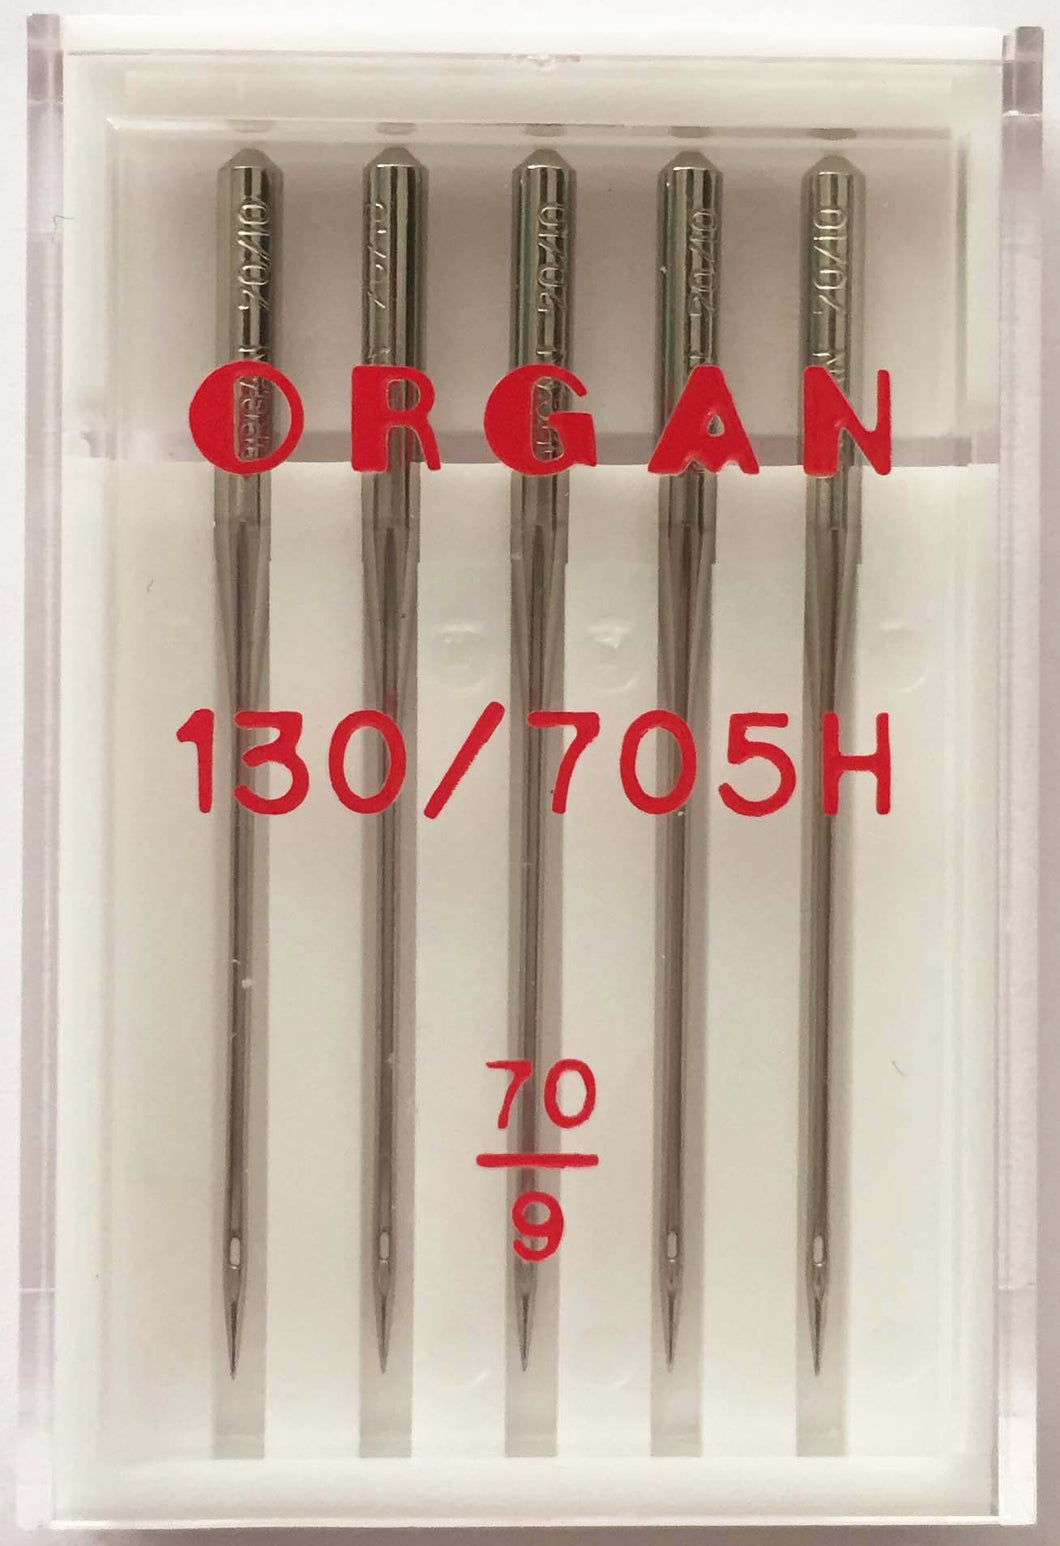 ORGAN Machine Needles 70/10 Woven Needle - 5 Pack -  130/705H